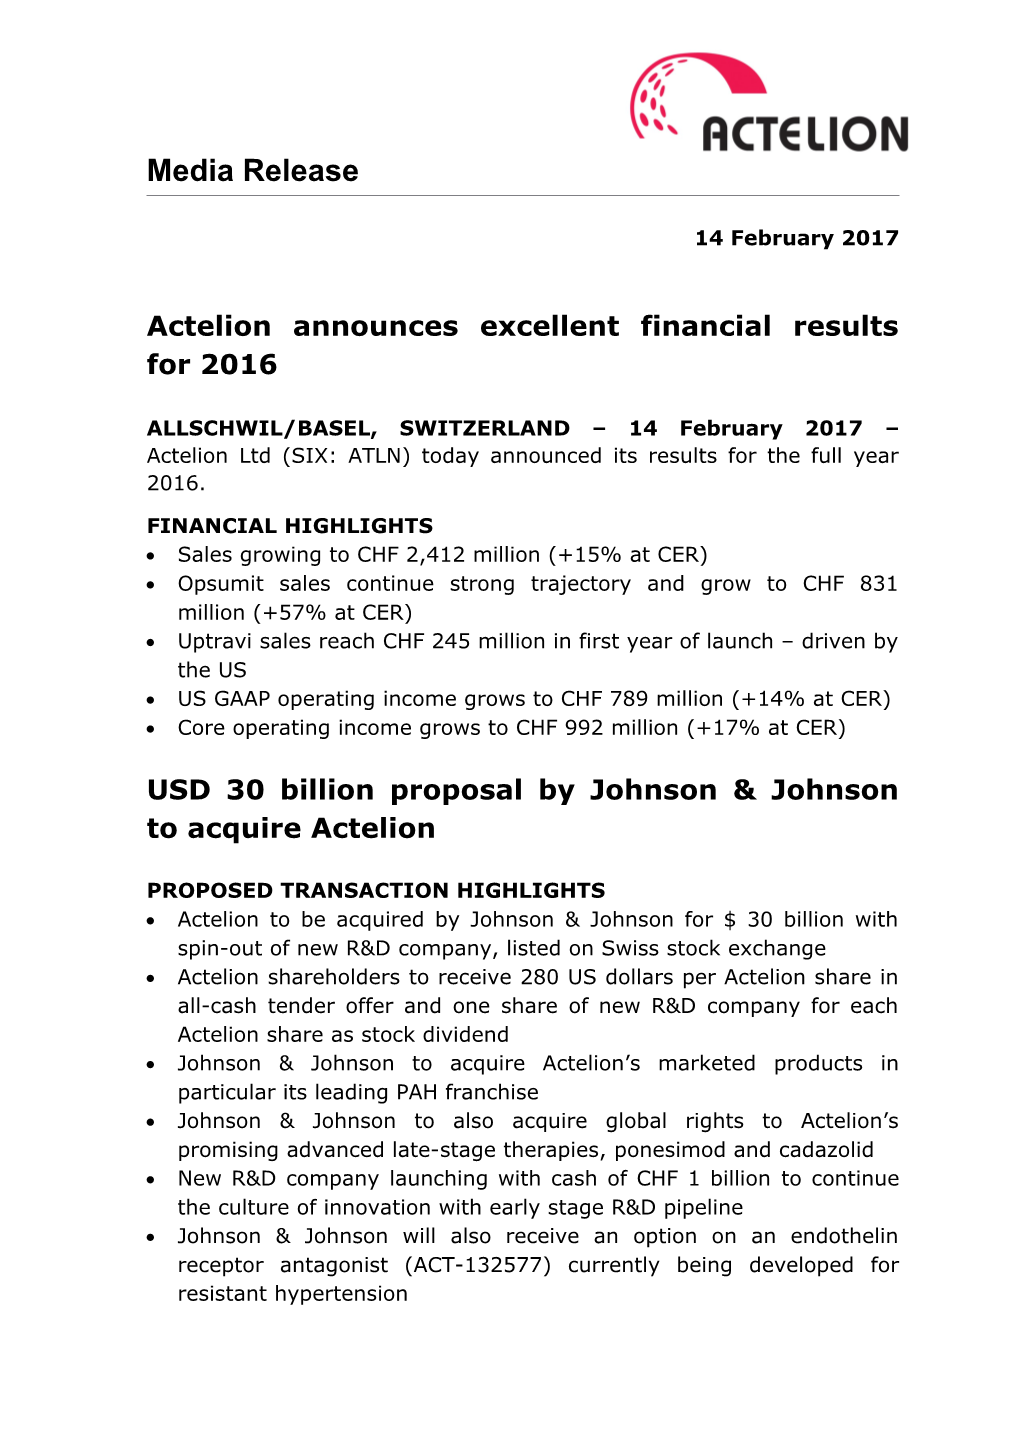 Actelion Announces Excellent Financial Results for 2016